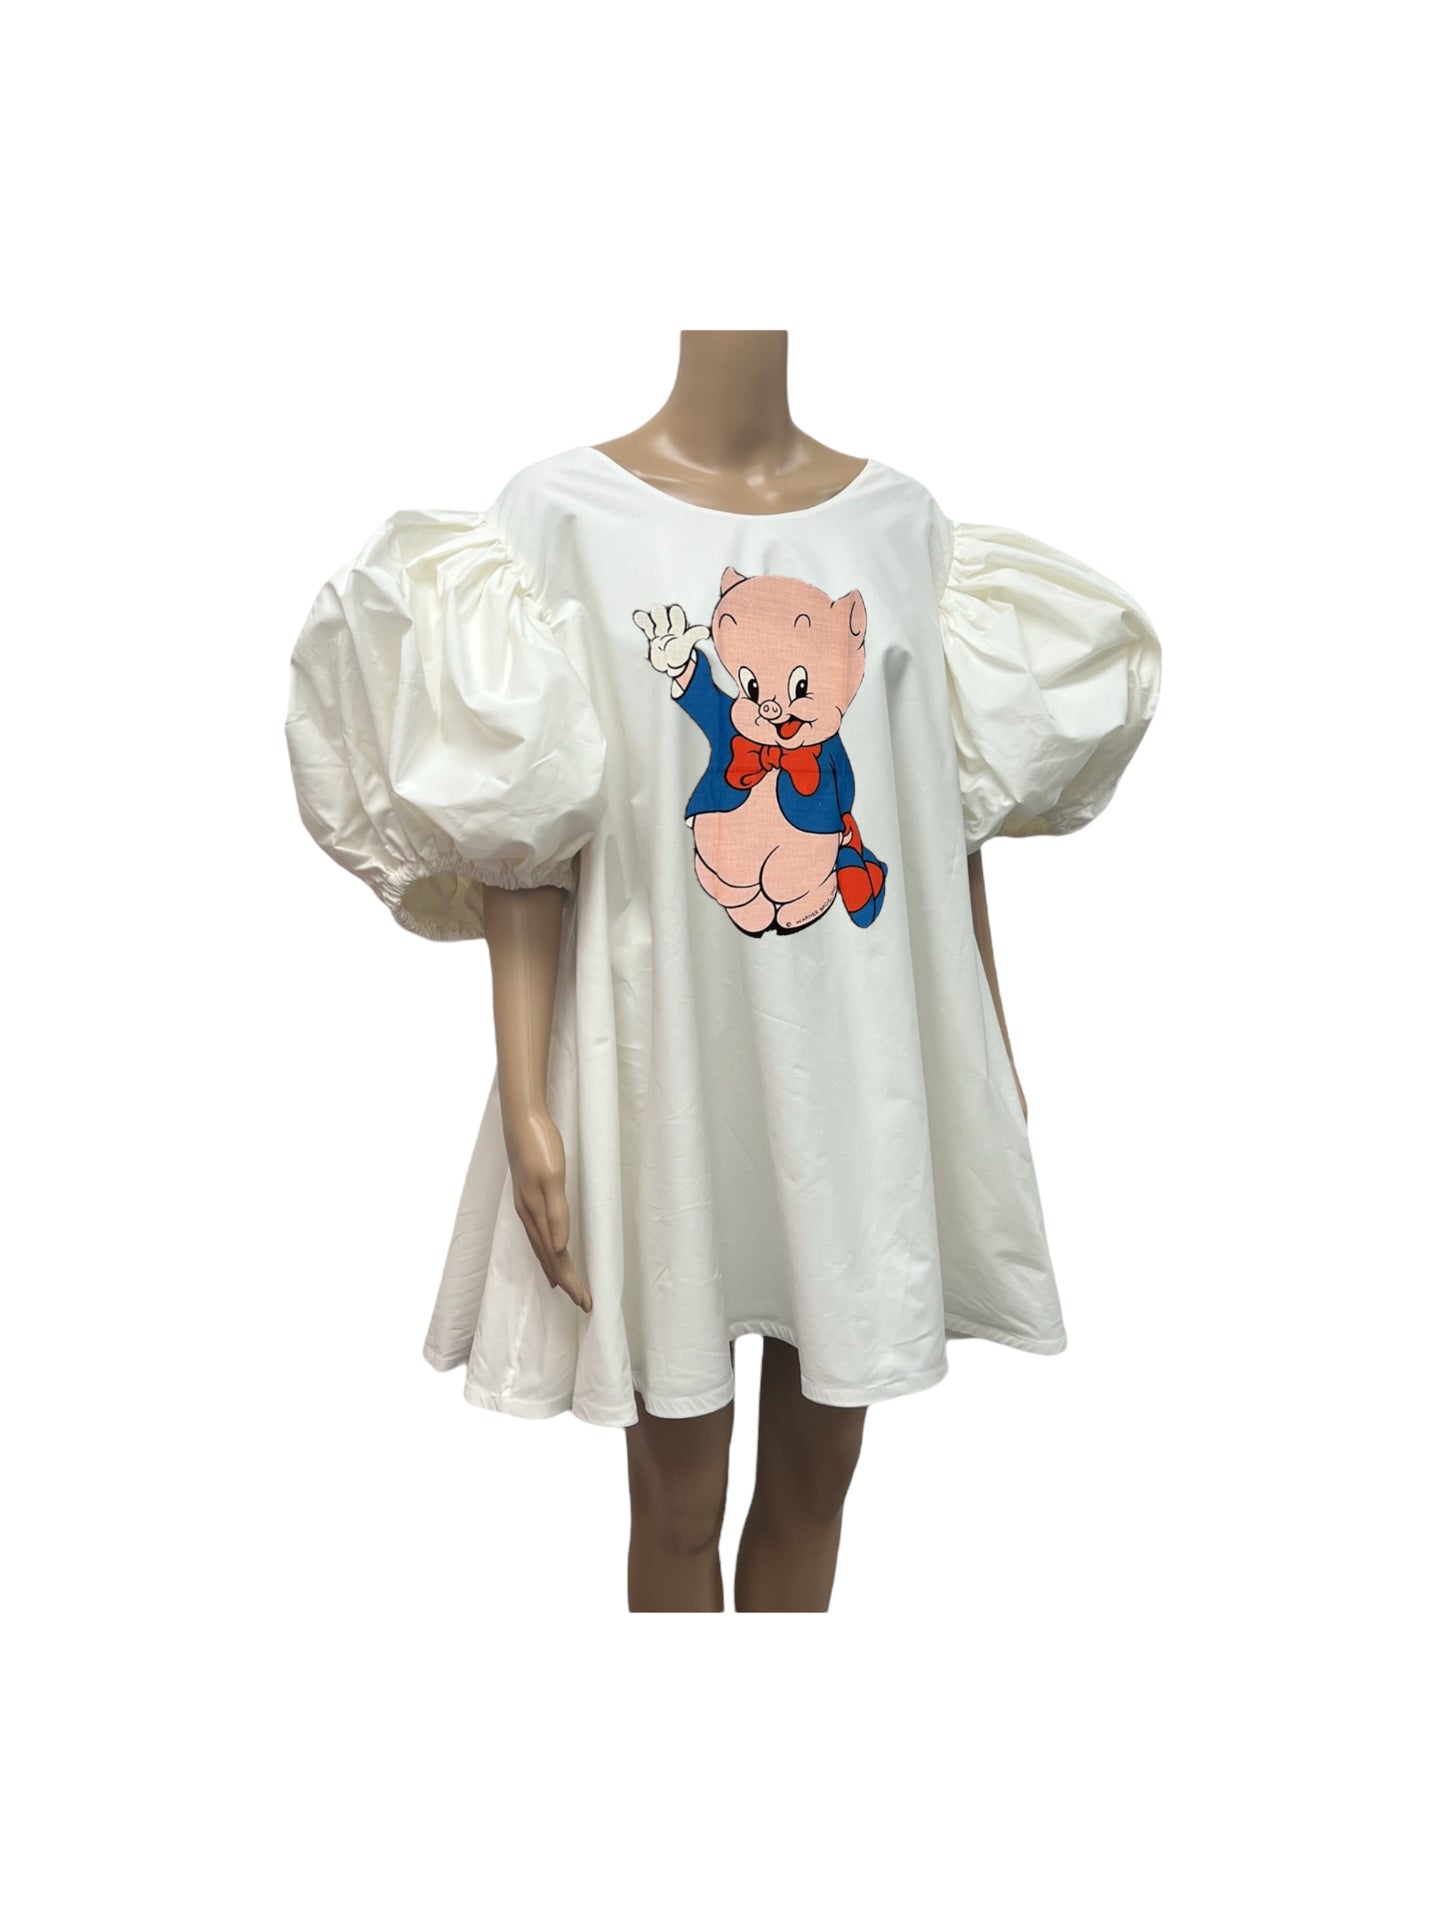 The custom Sophia dress in piggy